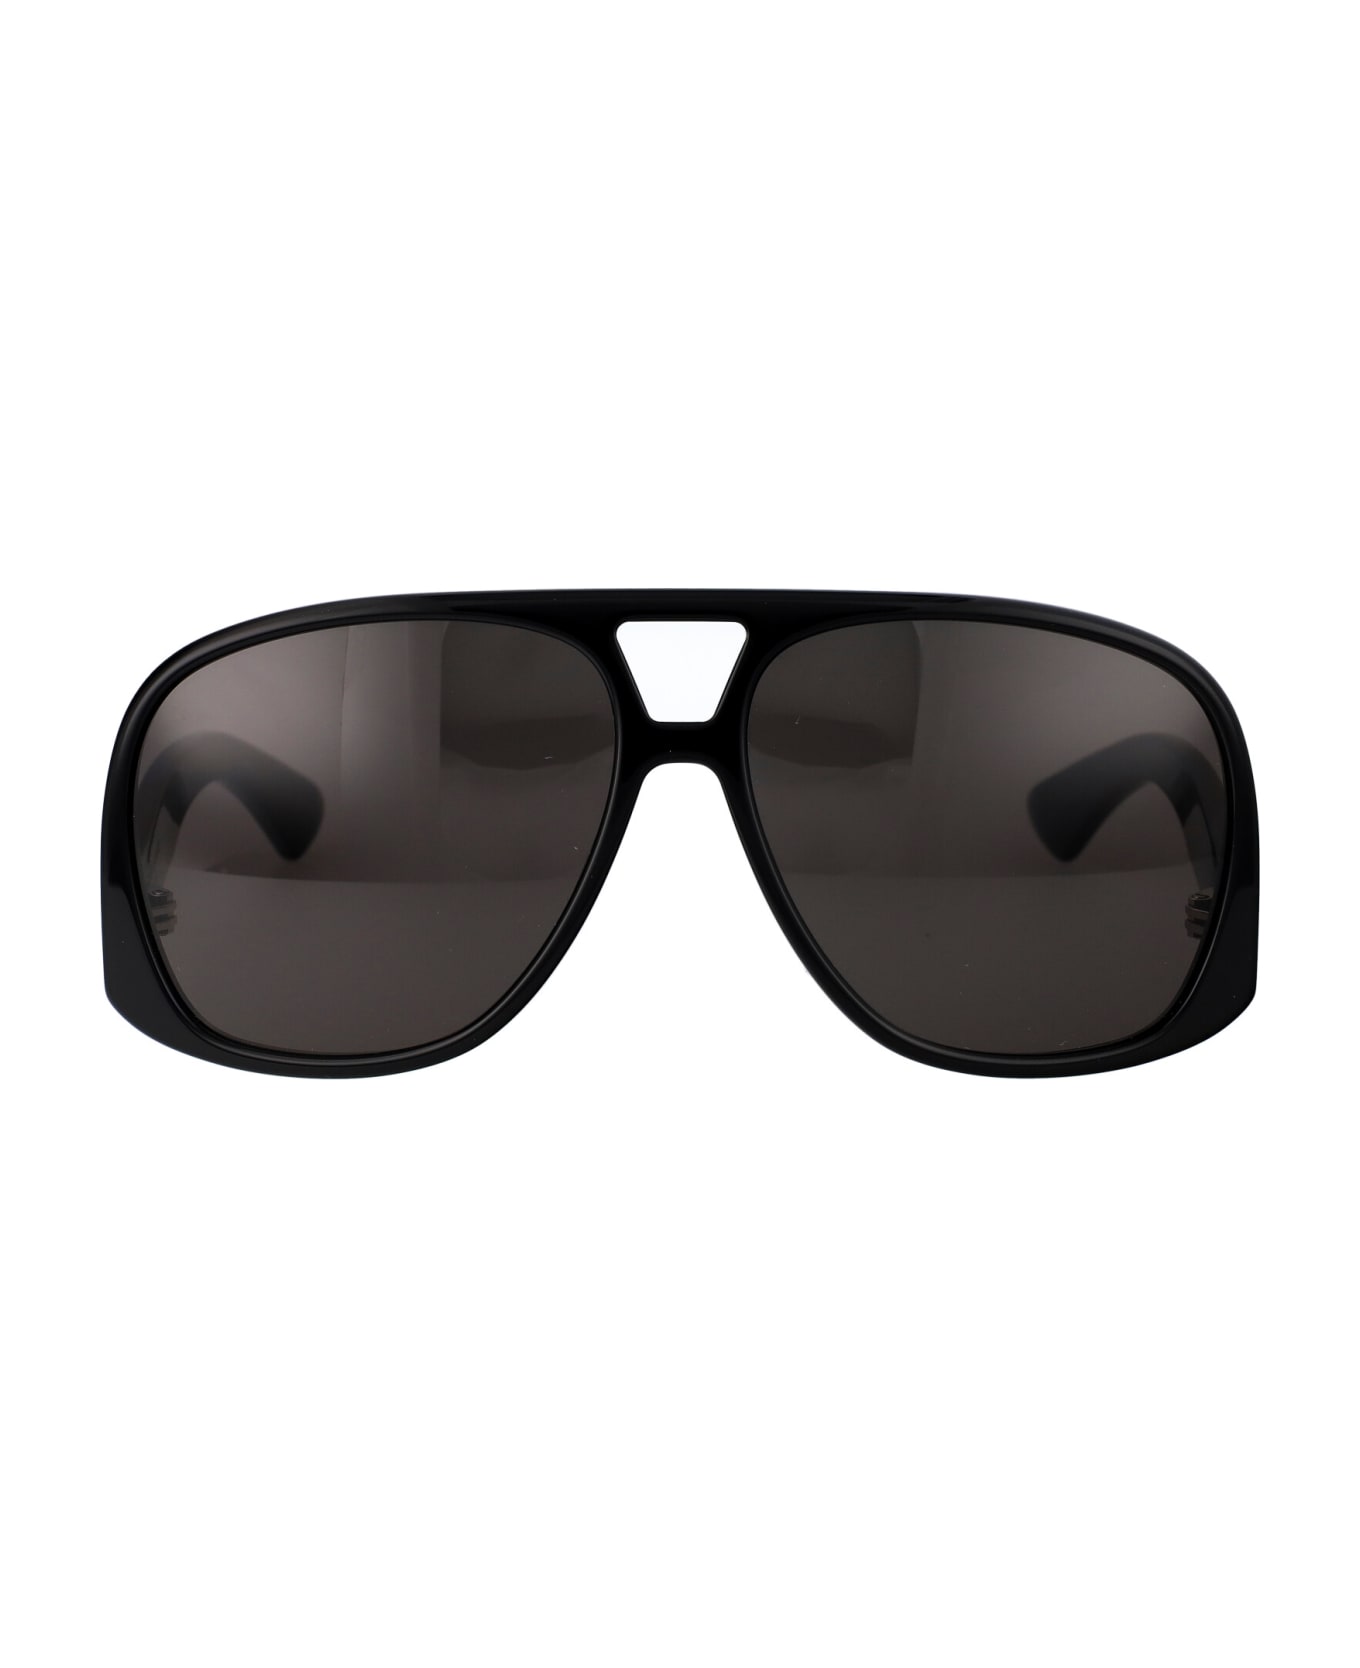 Saint Laurent Eyewear Sl 652 Solace Sunglasses - 001 BLACK BLACK BLACK